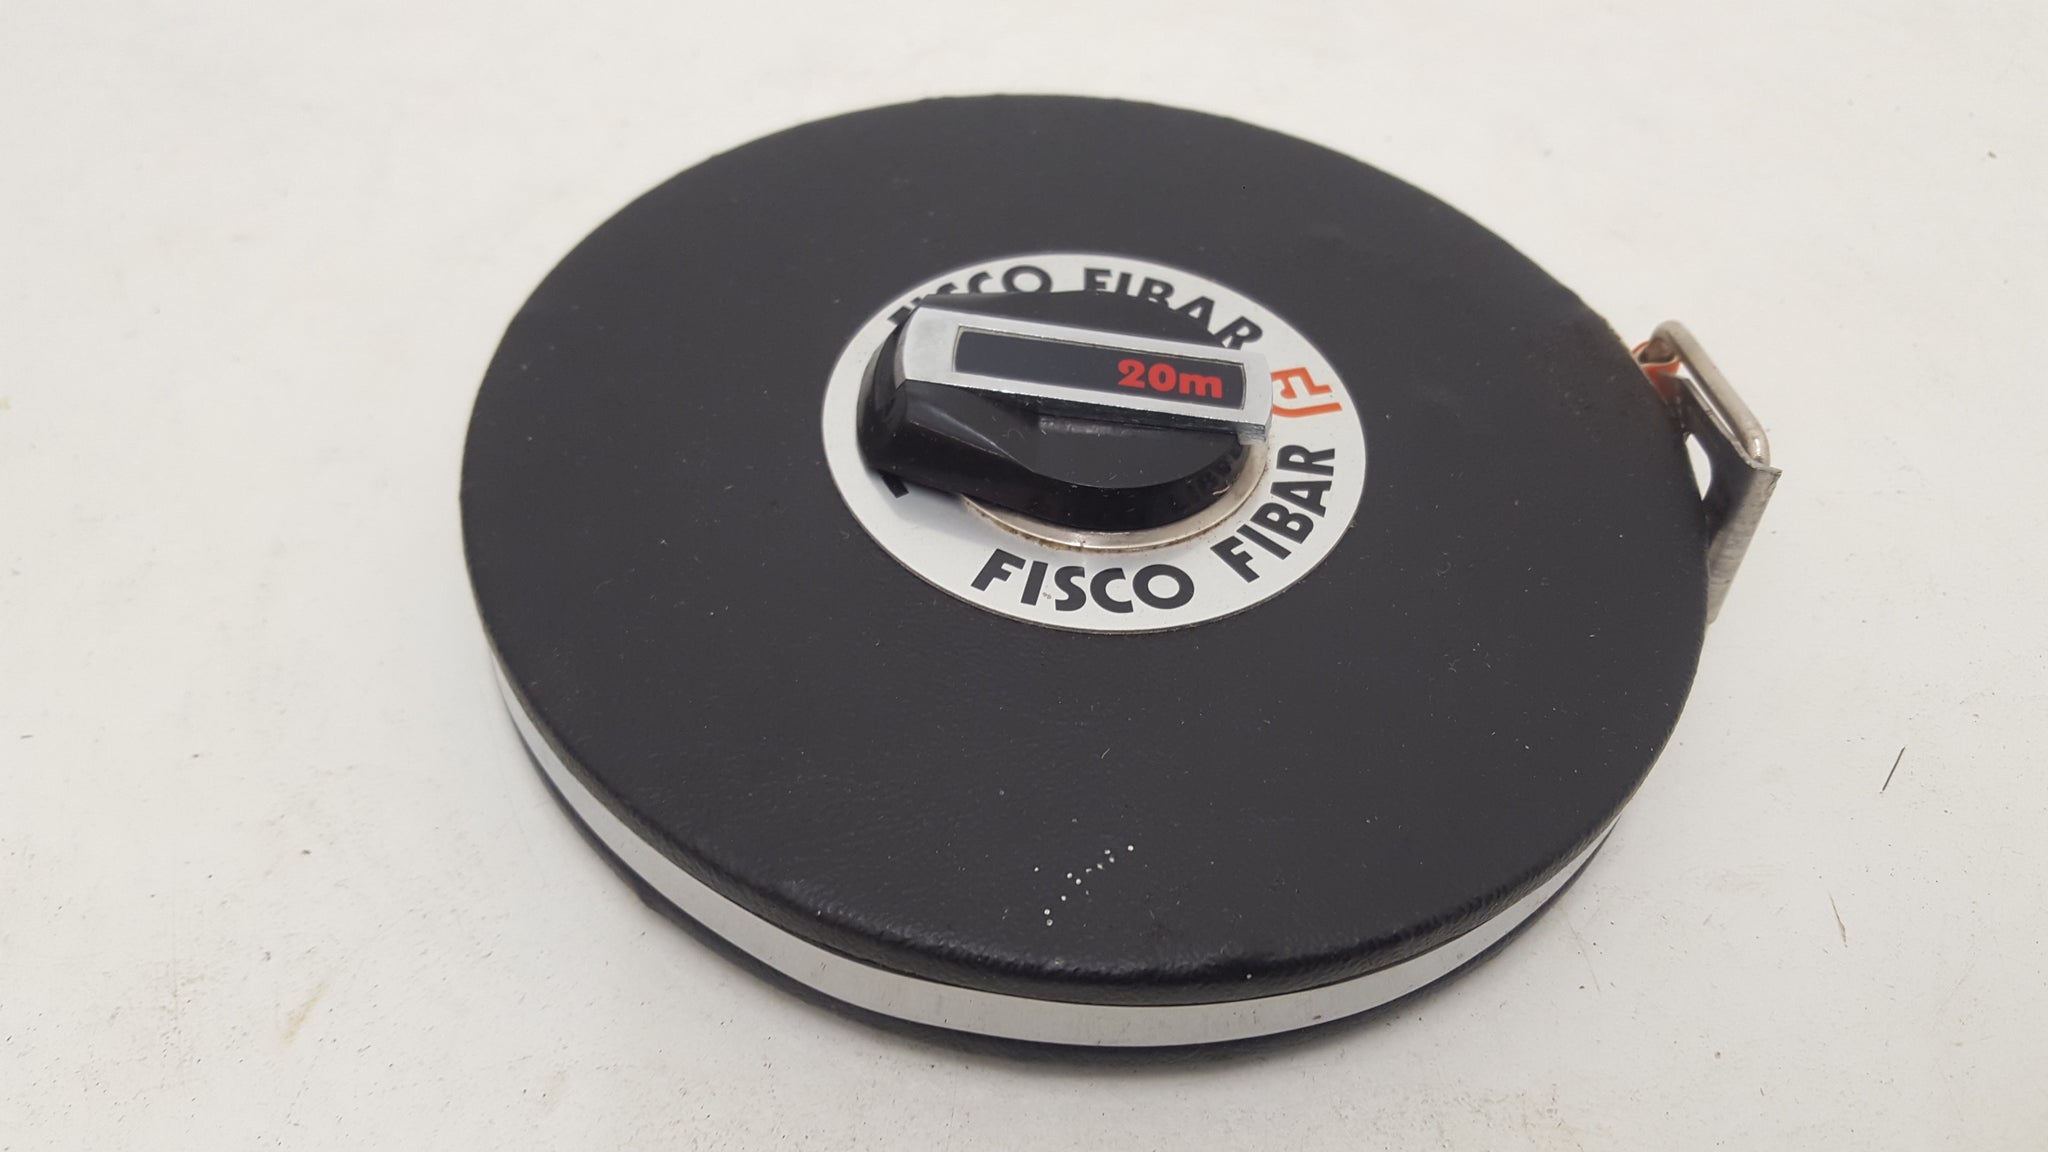 Fisco Fibar Measuring Tape 20m 18631-The Vintage Tool Shop